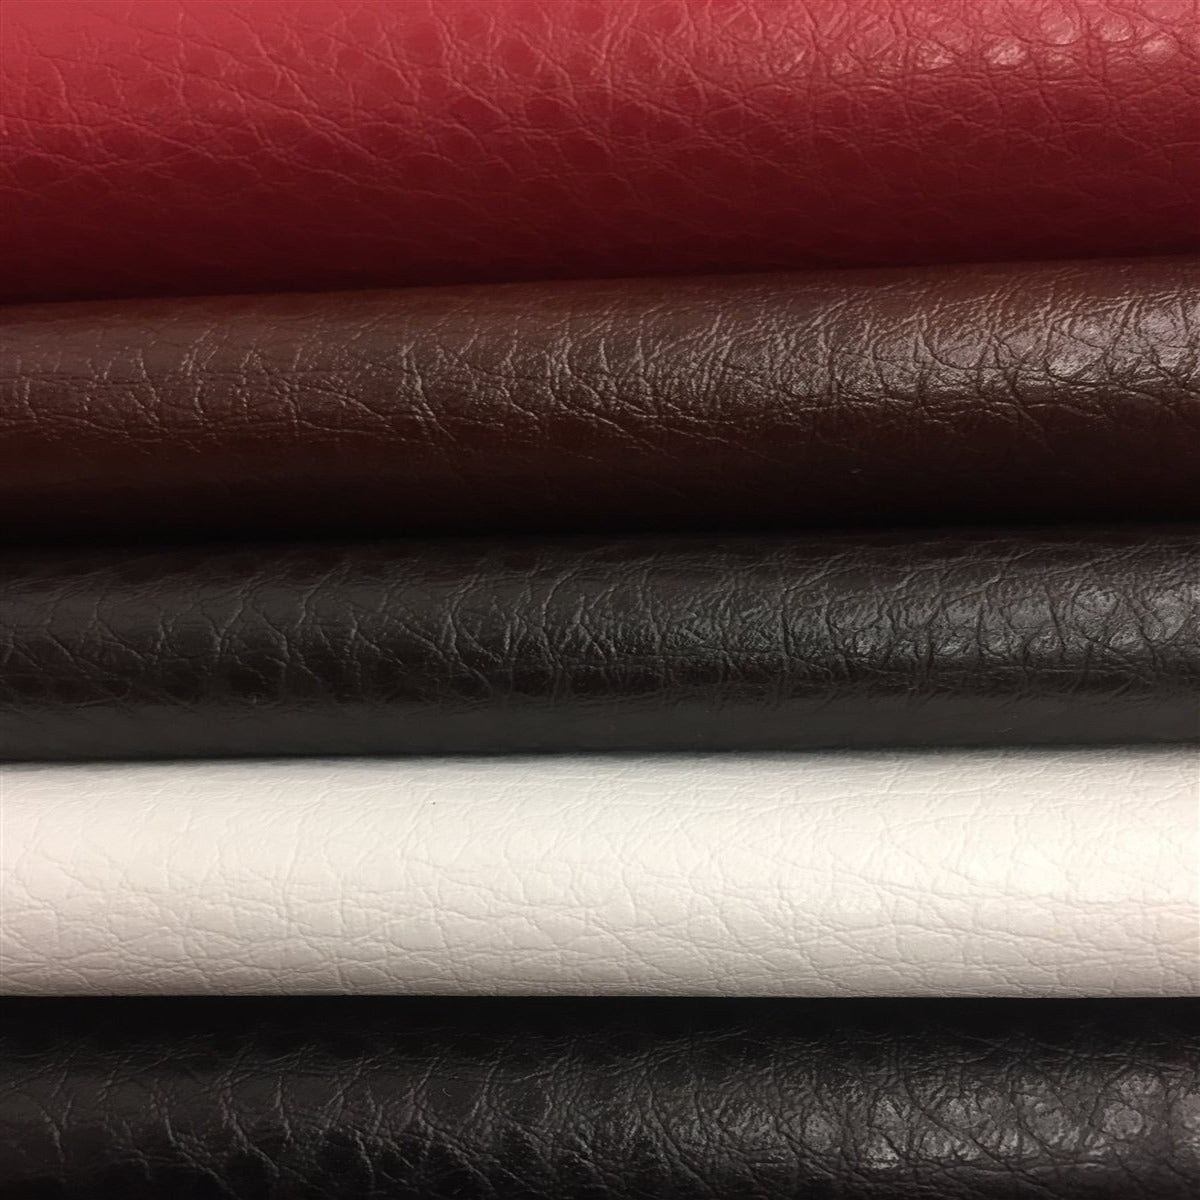 Dark Brown Henry Semi Glossy PU Leather Vinyl Fabric - Fashion Fabrics Los Angeles 